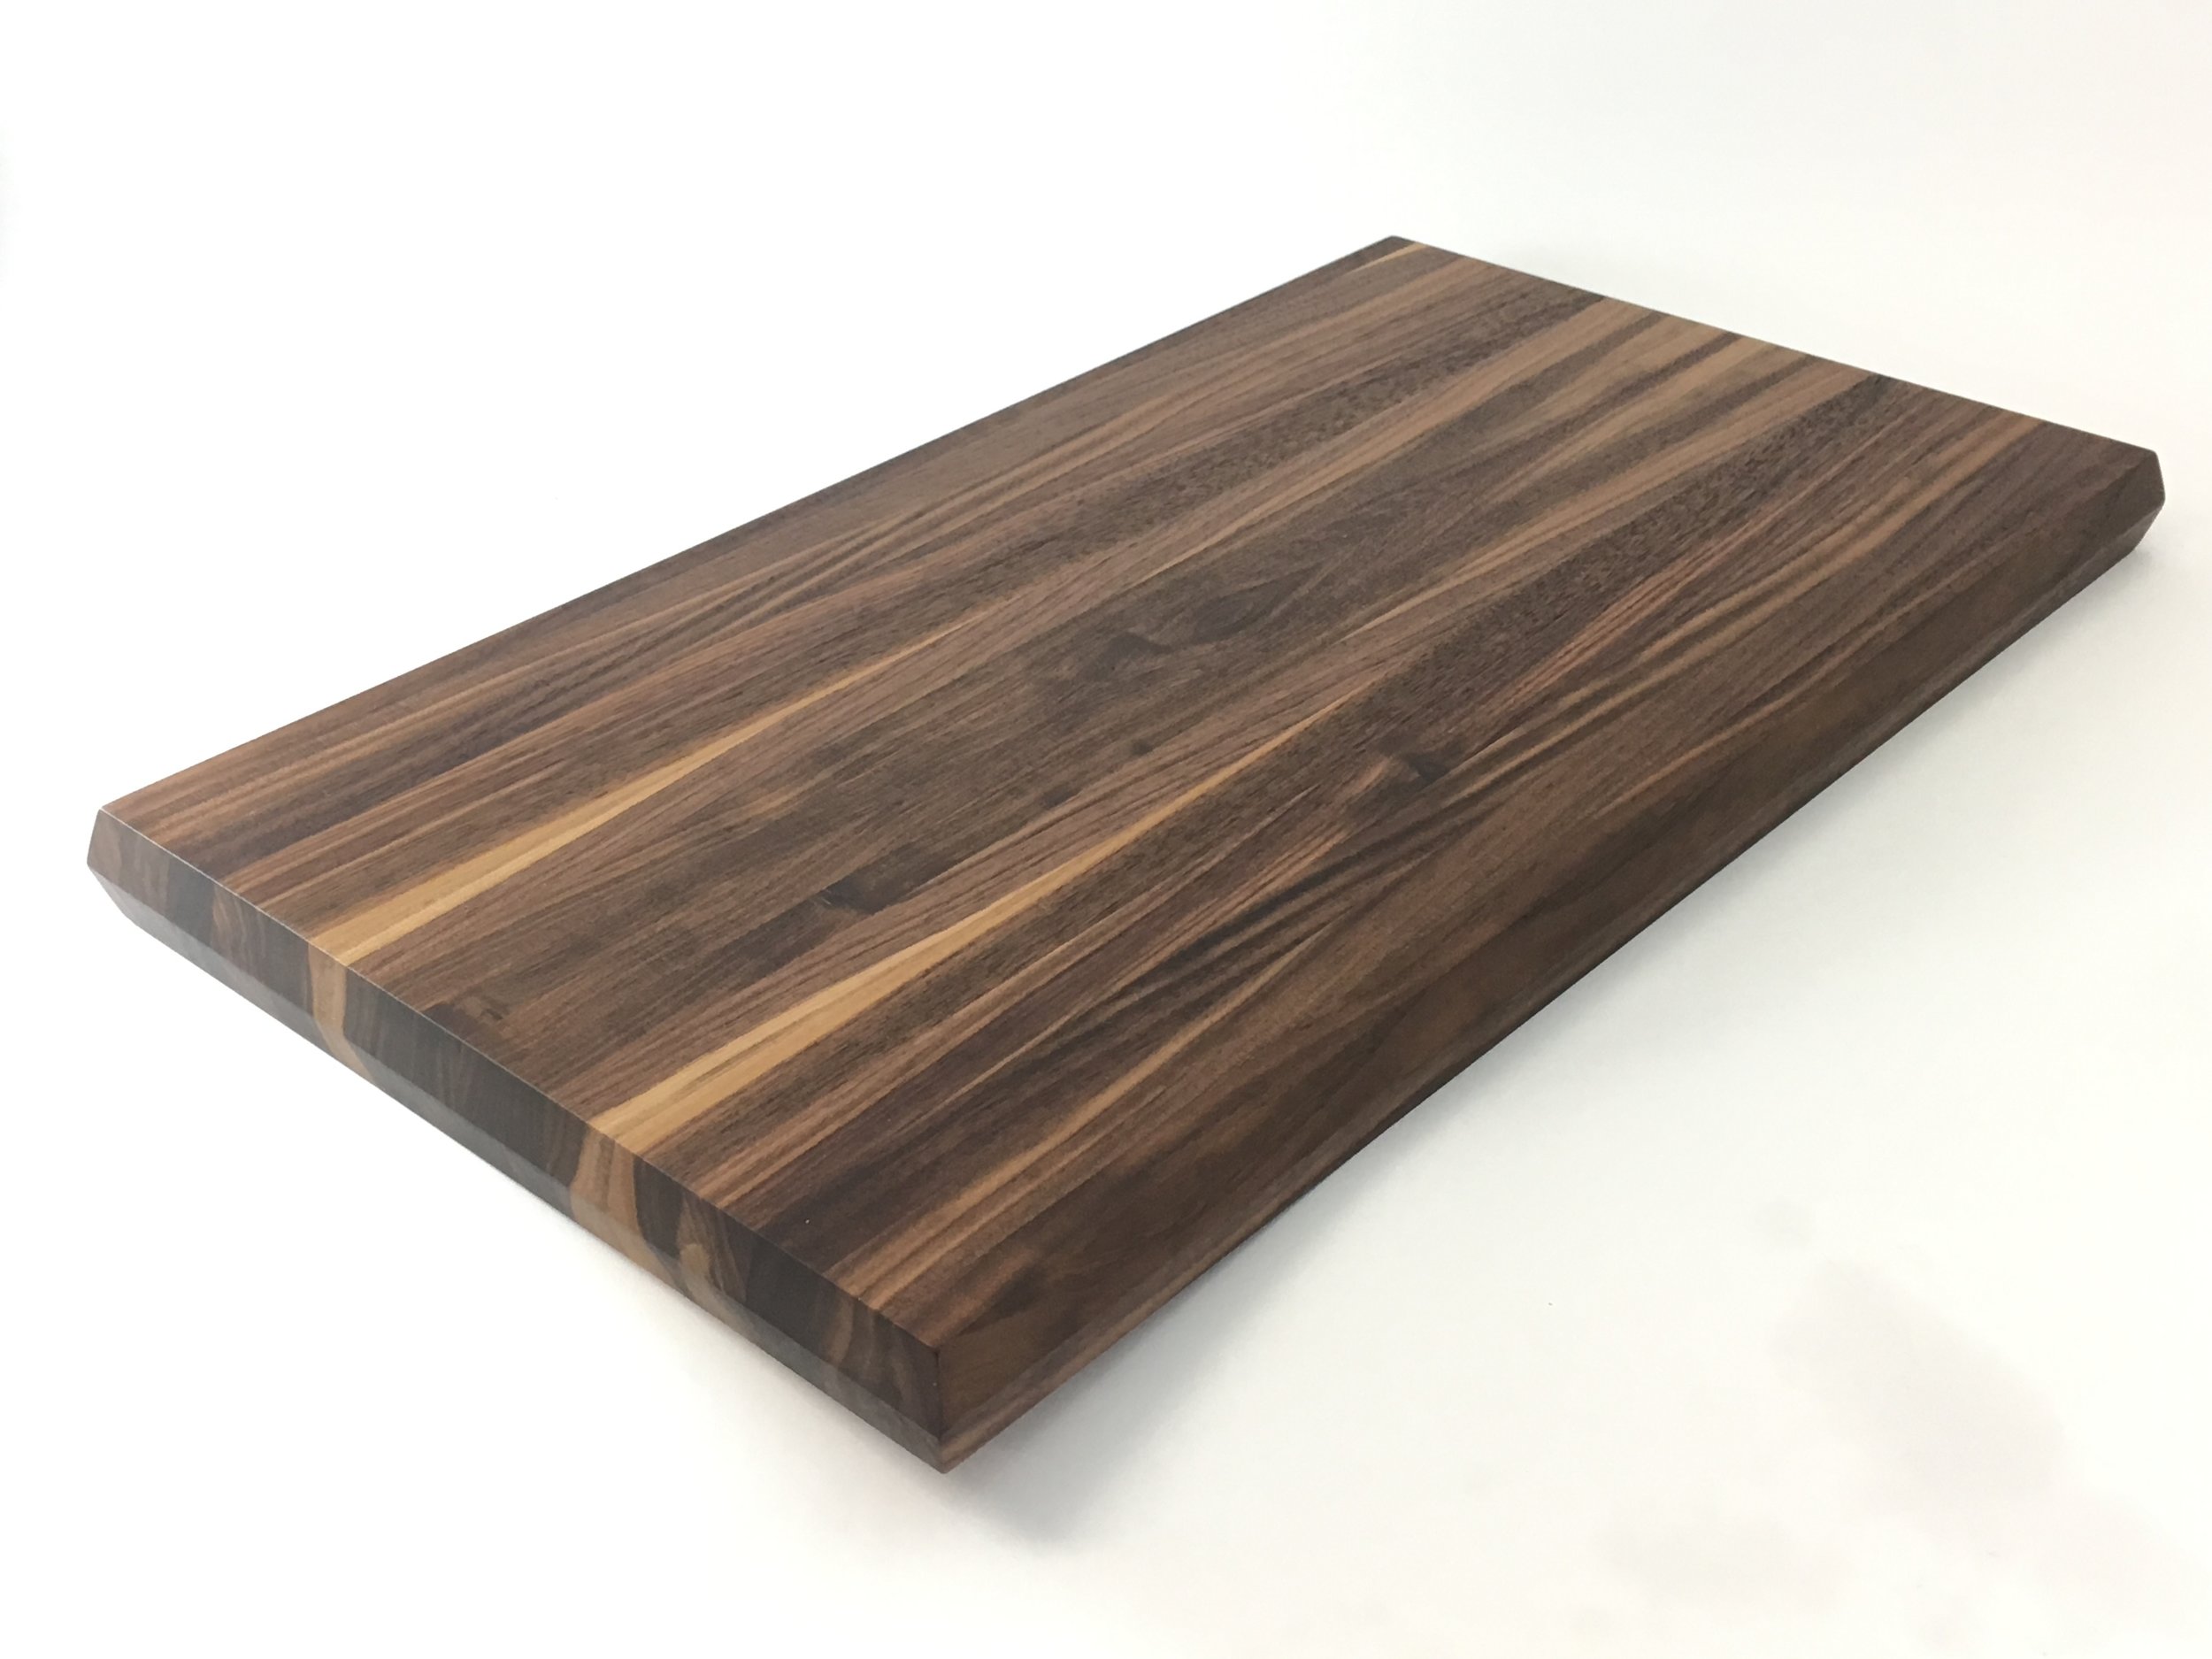 PRIMOLEGNO oval cutting board in natural wood with bark 38x17 cm trunk model 